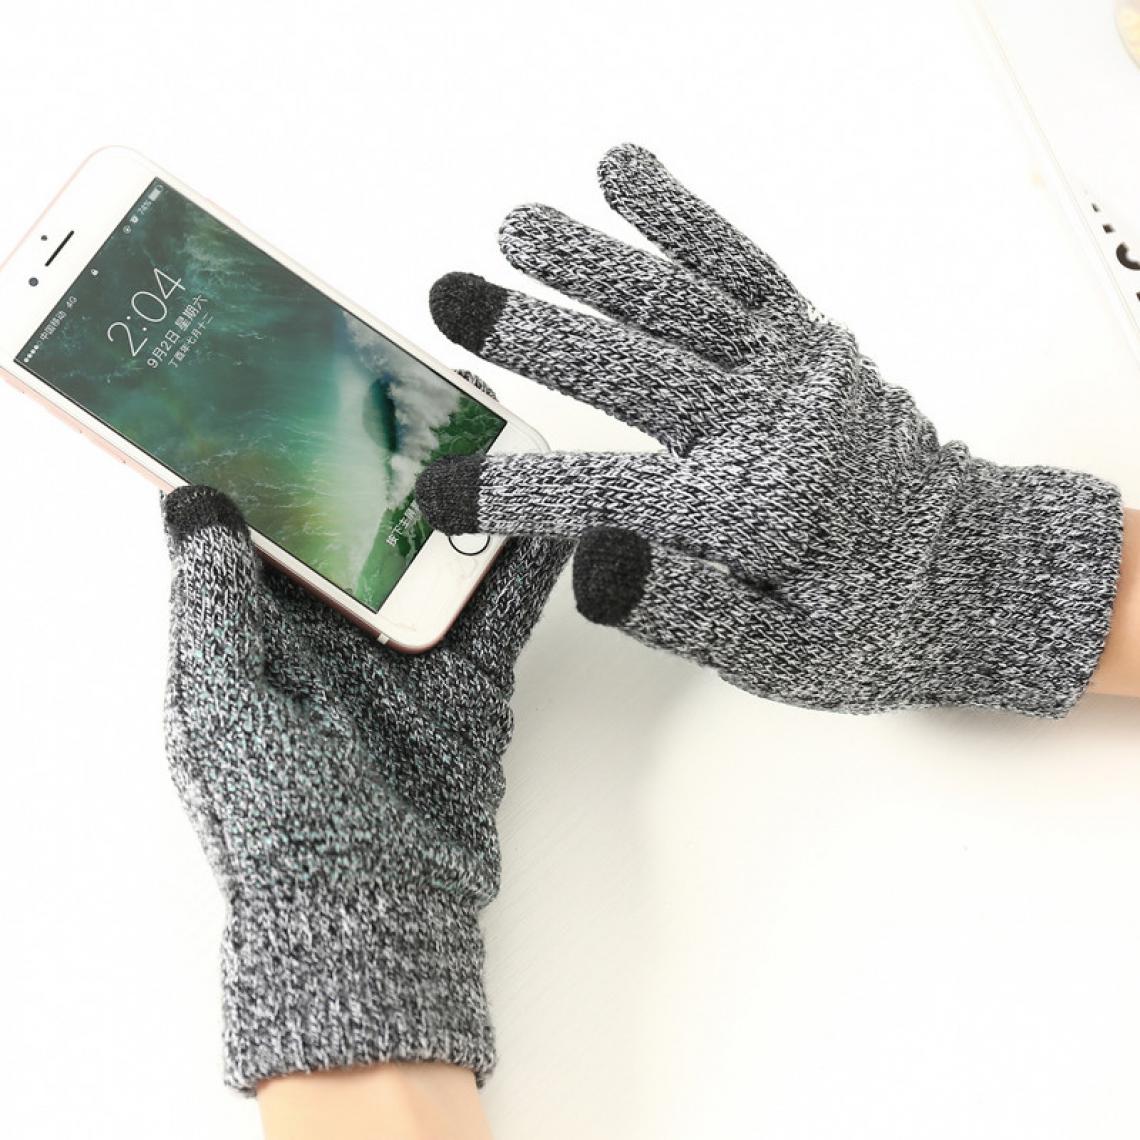 Shot - Gants Homme tactiles pour SONY Xperia XA1 Ultra Smartphone Taille M 3 doigts Hiver (GRIS) - Autres accessoires smartphone